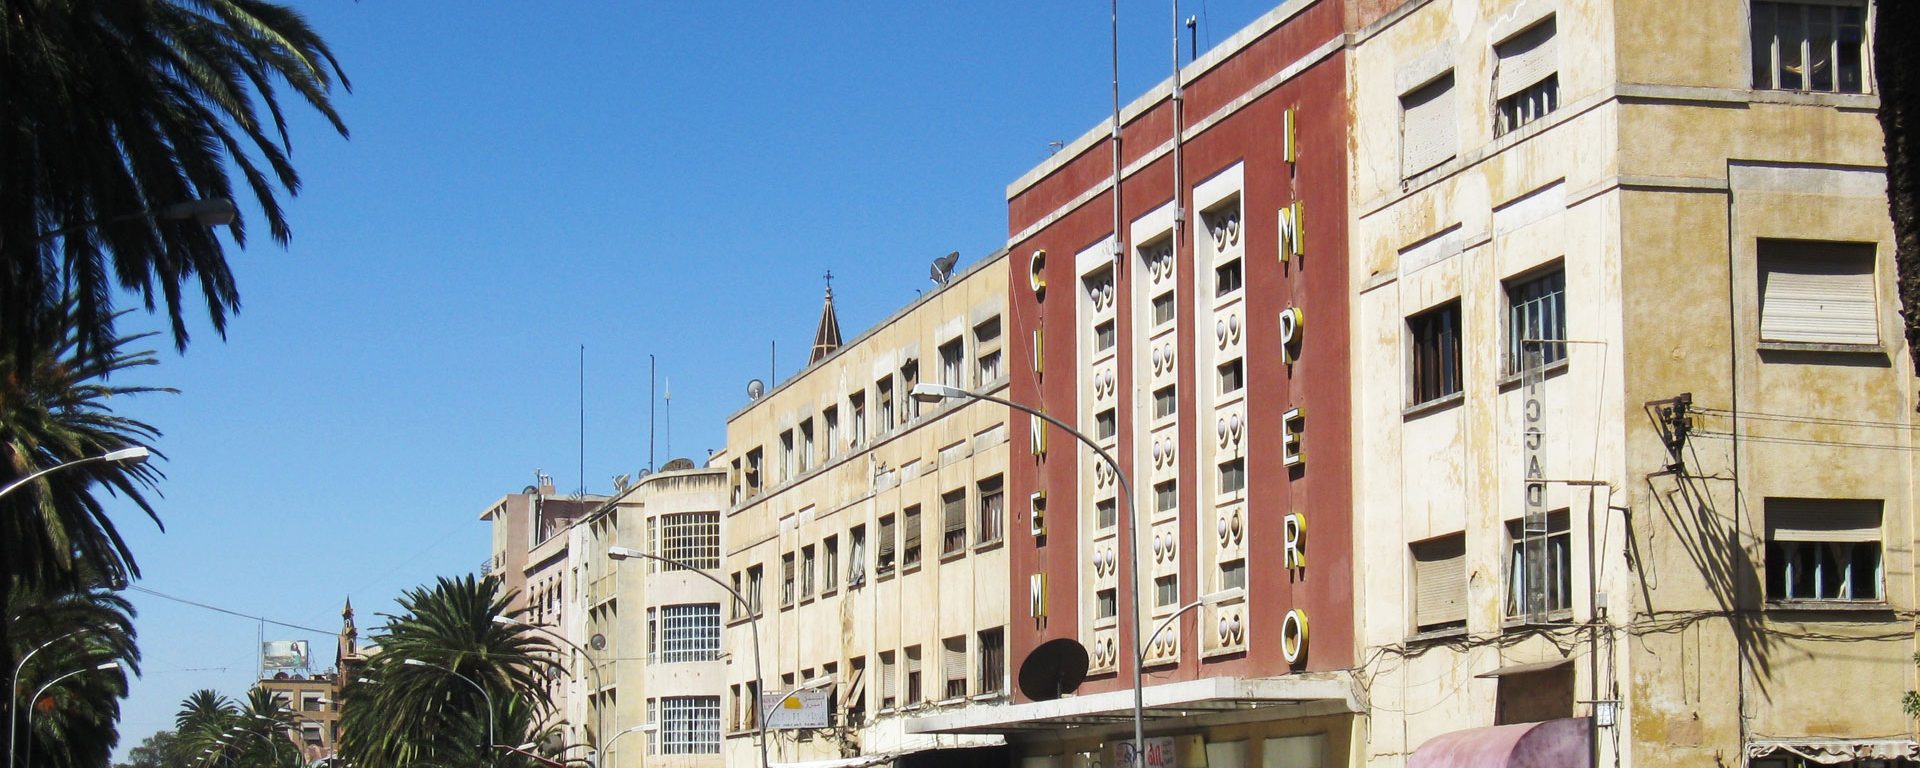 The art deco style Cinema Impero building in Asmara, Eritrea